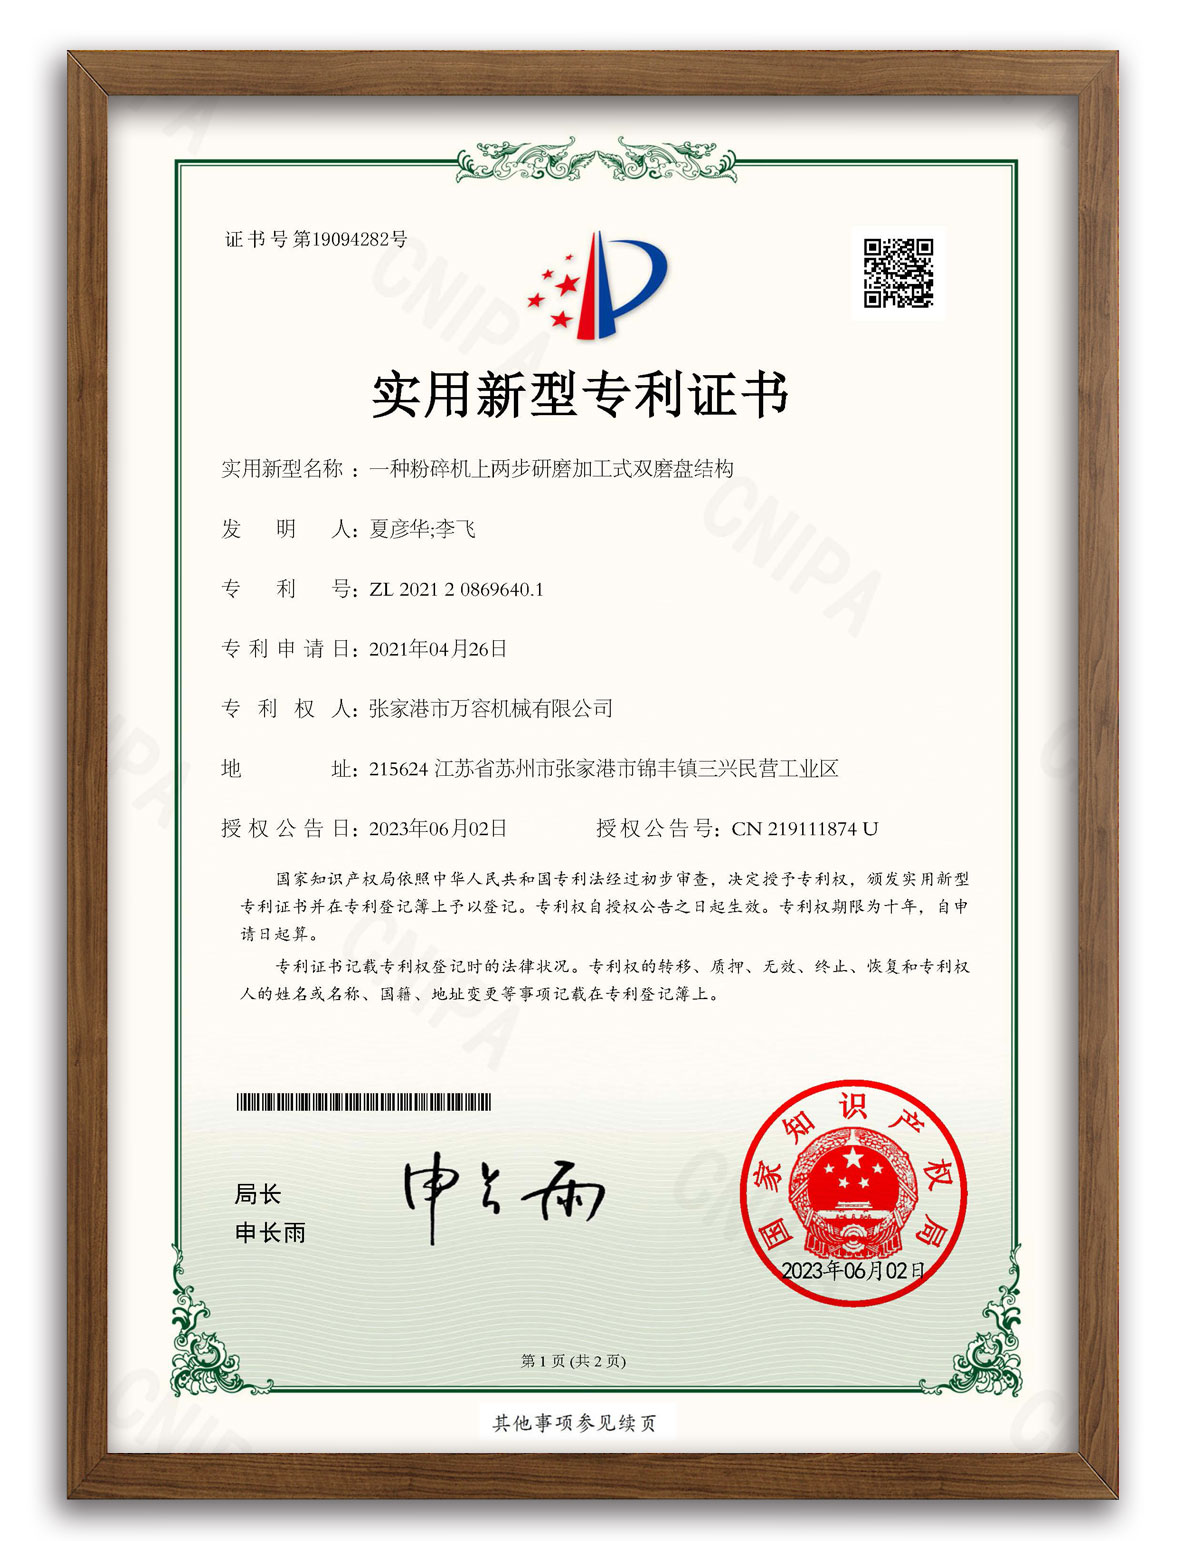 Double Disc Plastic Pulverizer Utility Model Patent Certificate